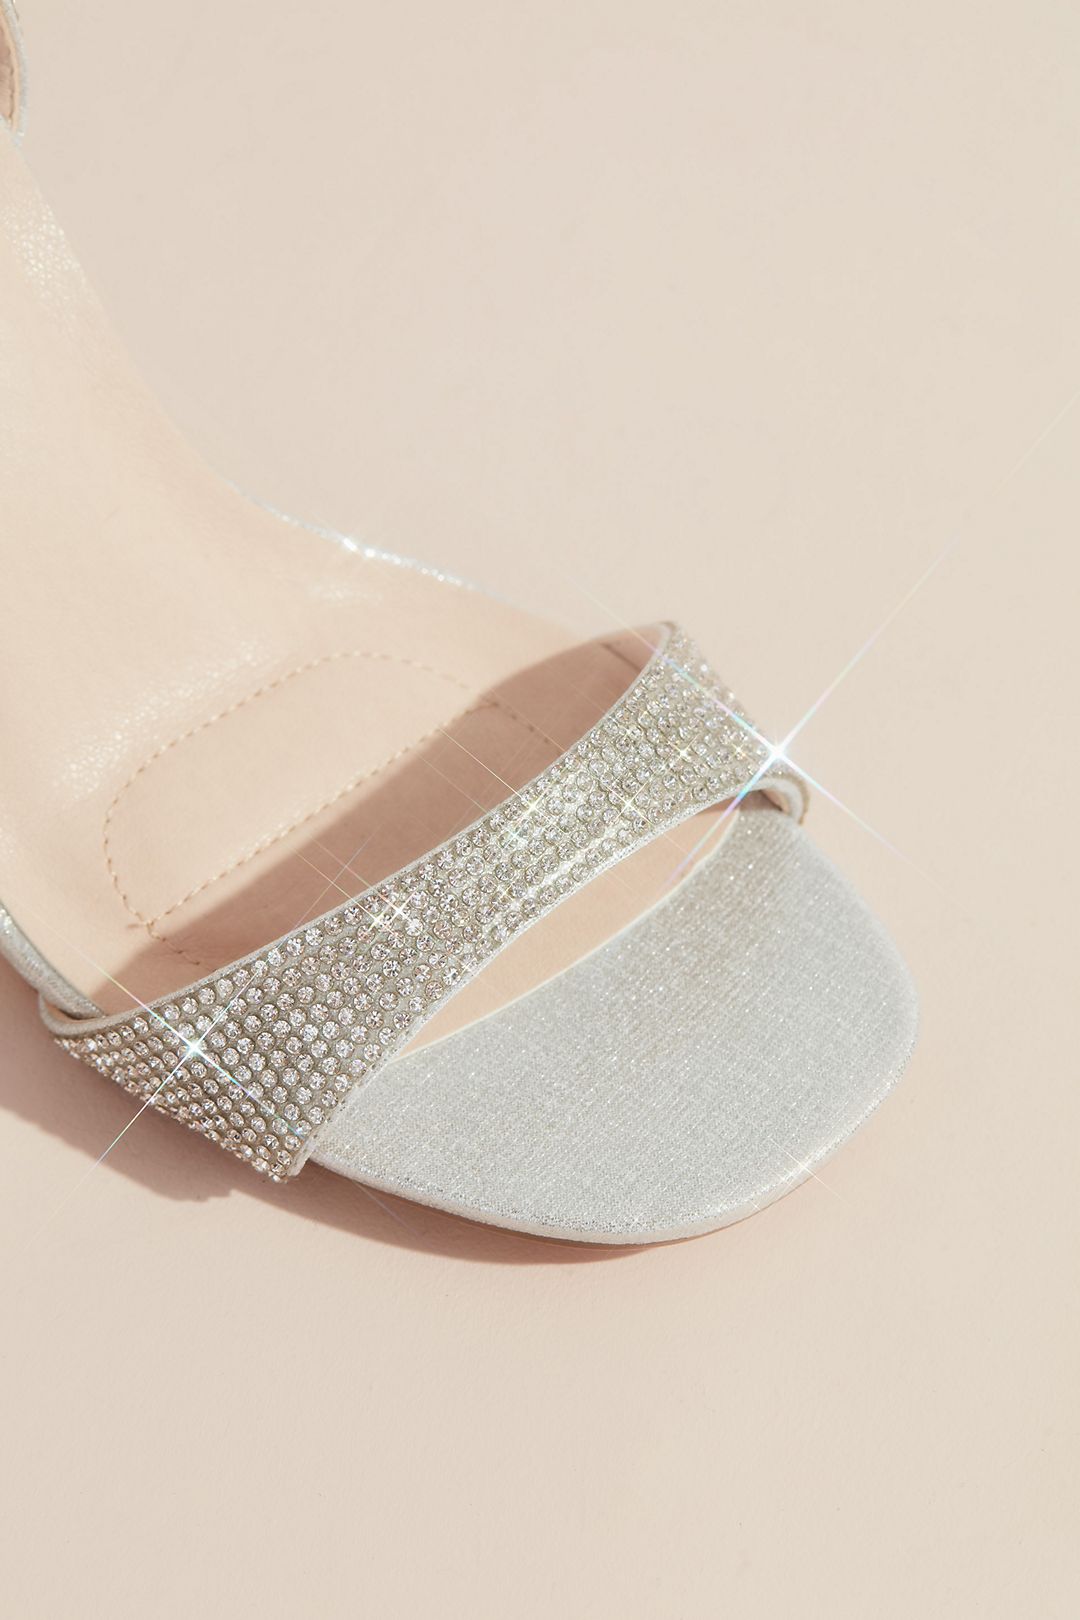 Sparkly Minimalist Ankle Strap Block Heel Sandals Image 3